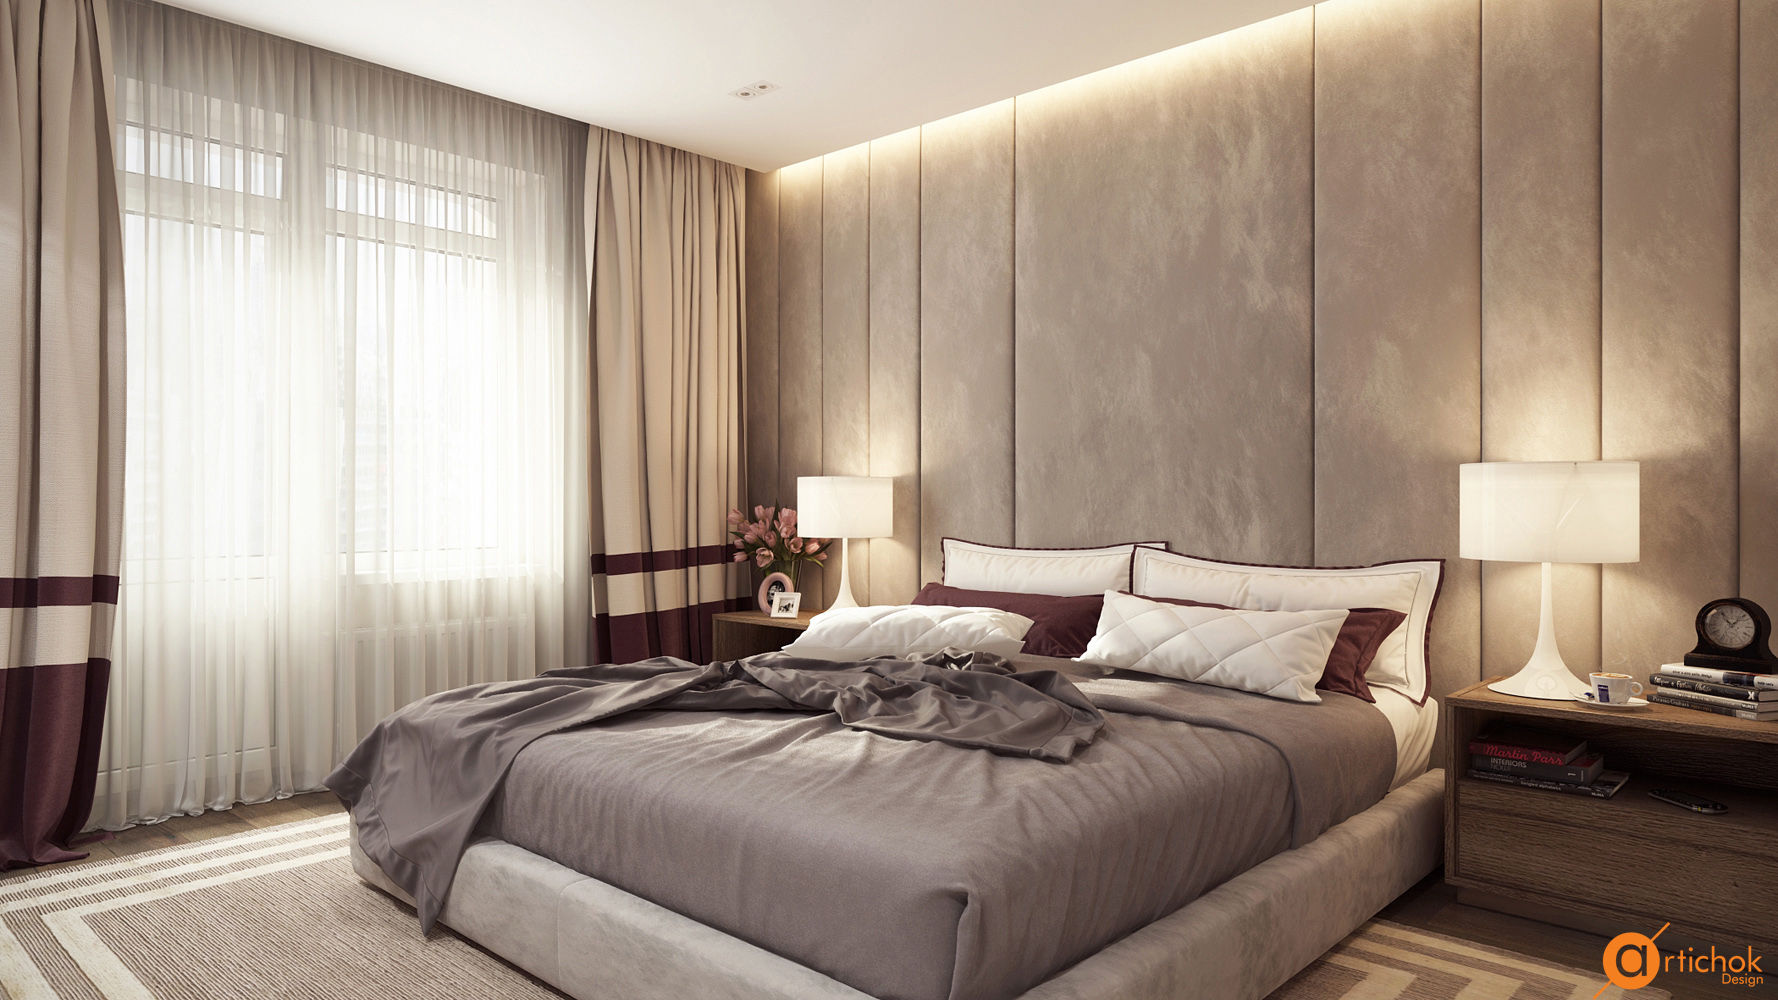 The harmony of present, Artichok Design Artichok Design Minimalist bedroom